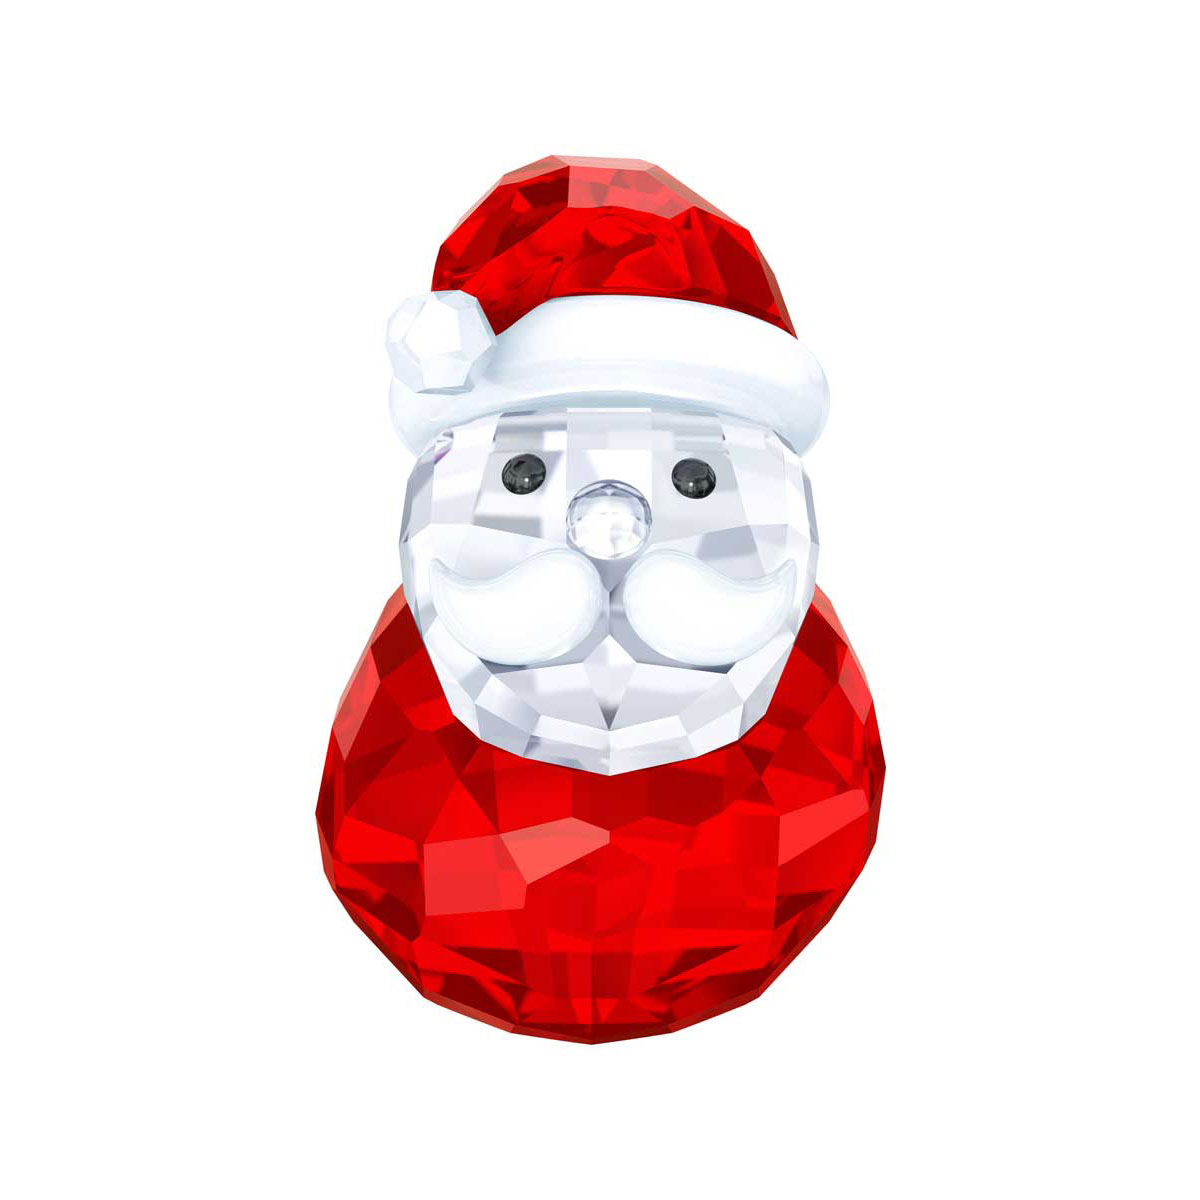 Swarovski Rocking Santa